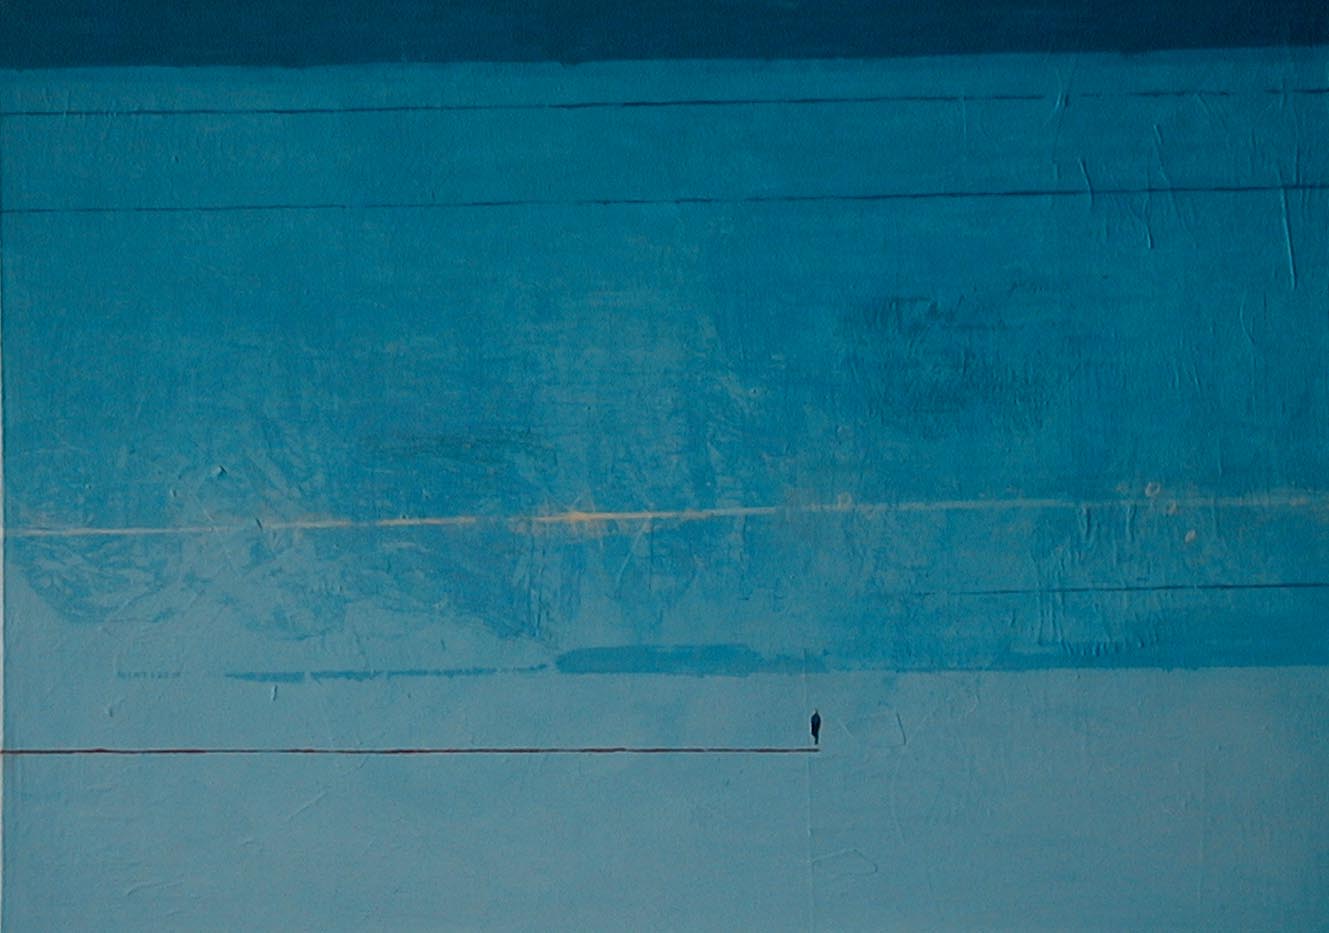 Mendrek Pawel 
"Life of the Horizon 13 Uhr 30", 2002
acrylic / canvas
100 x 140 cm